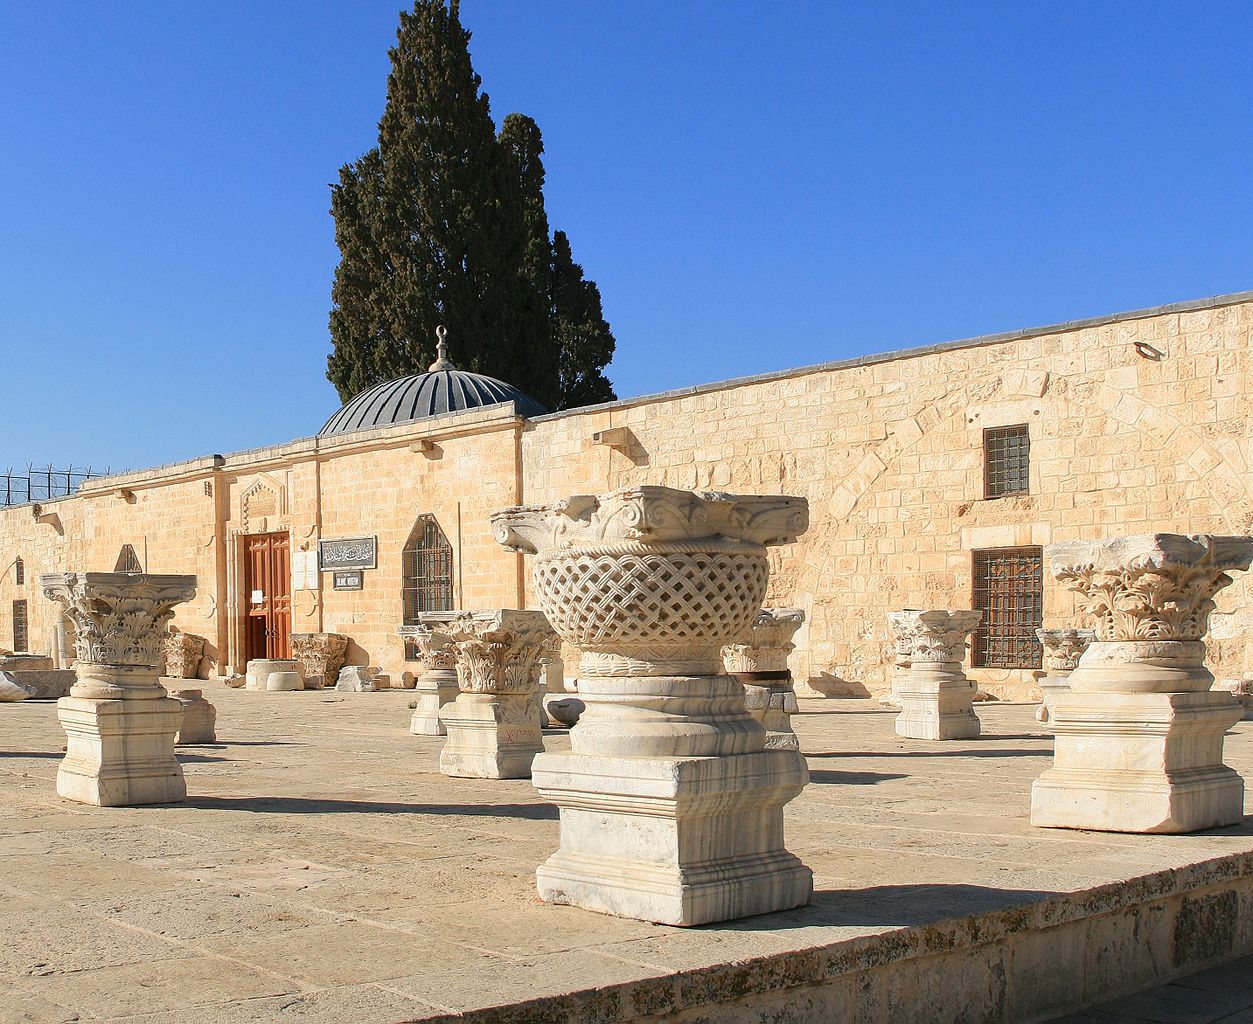 The Islamic Museum on the Haram al-Sharif/Temple Mount compound, East Jerusalem. (Ludvig14/Wikimedia Commons)